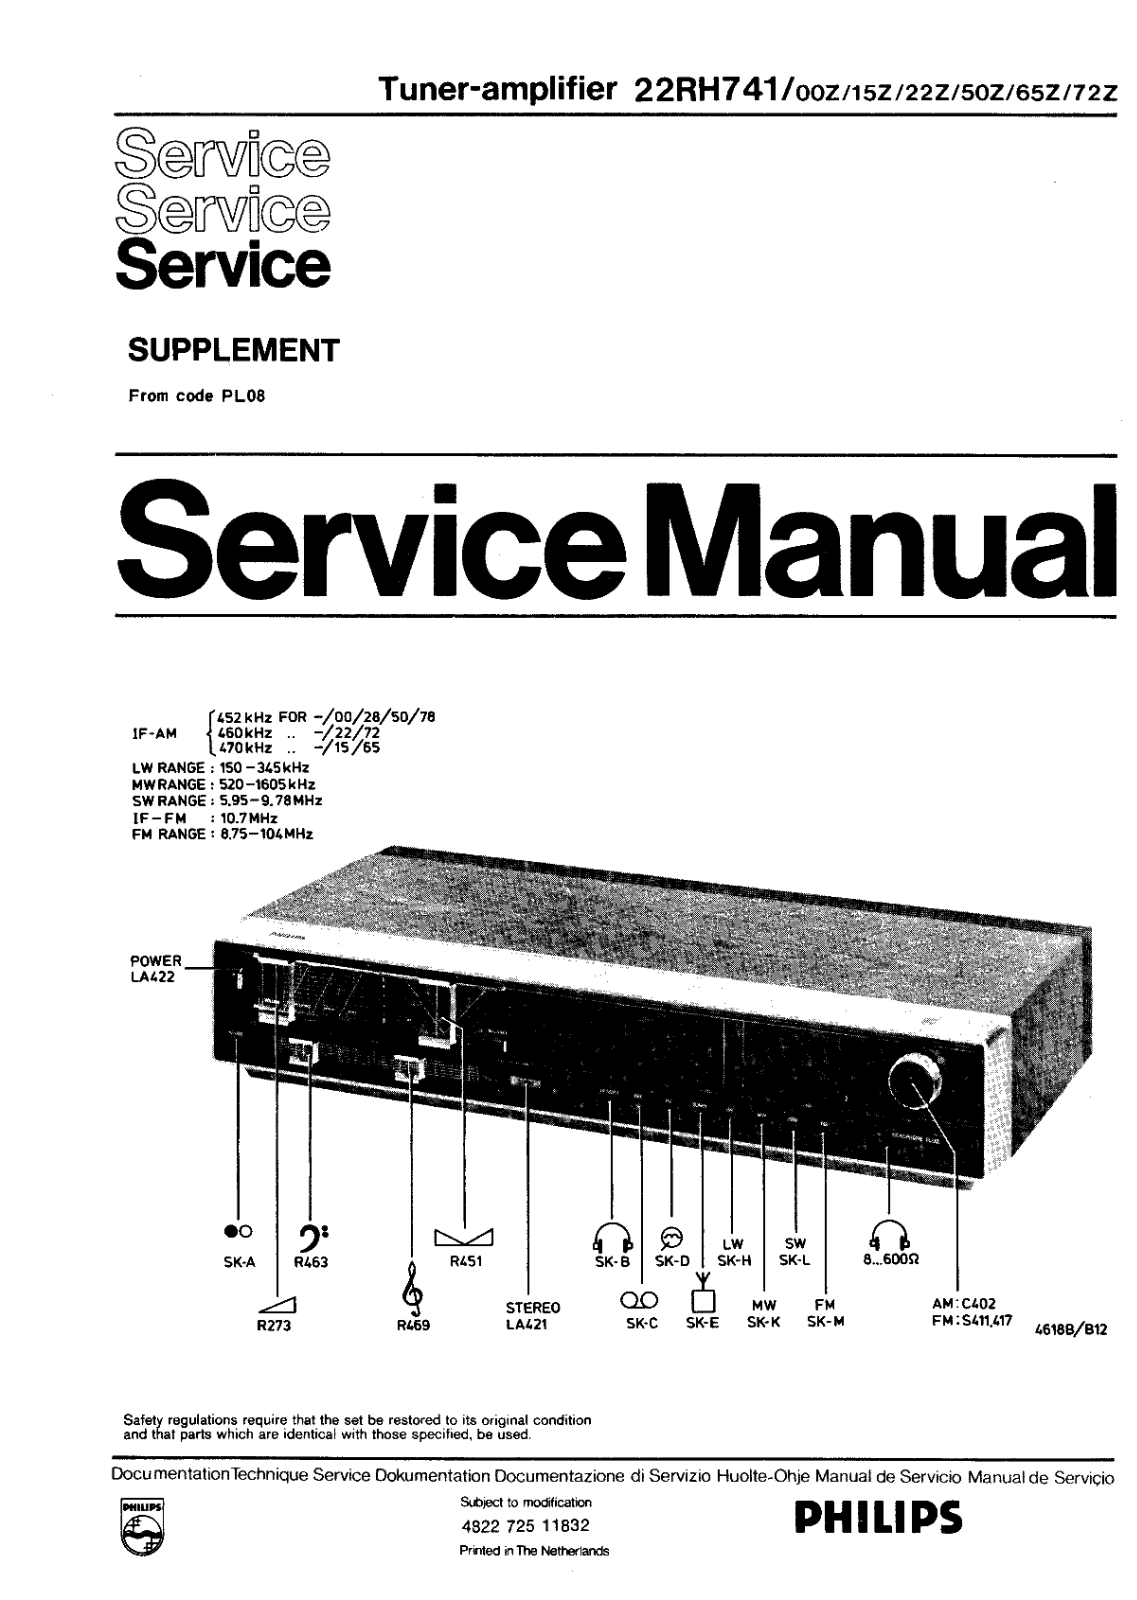 Philips 22-RH-741 Service Manual